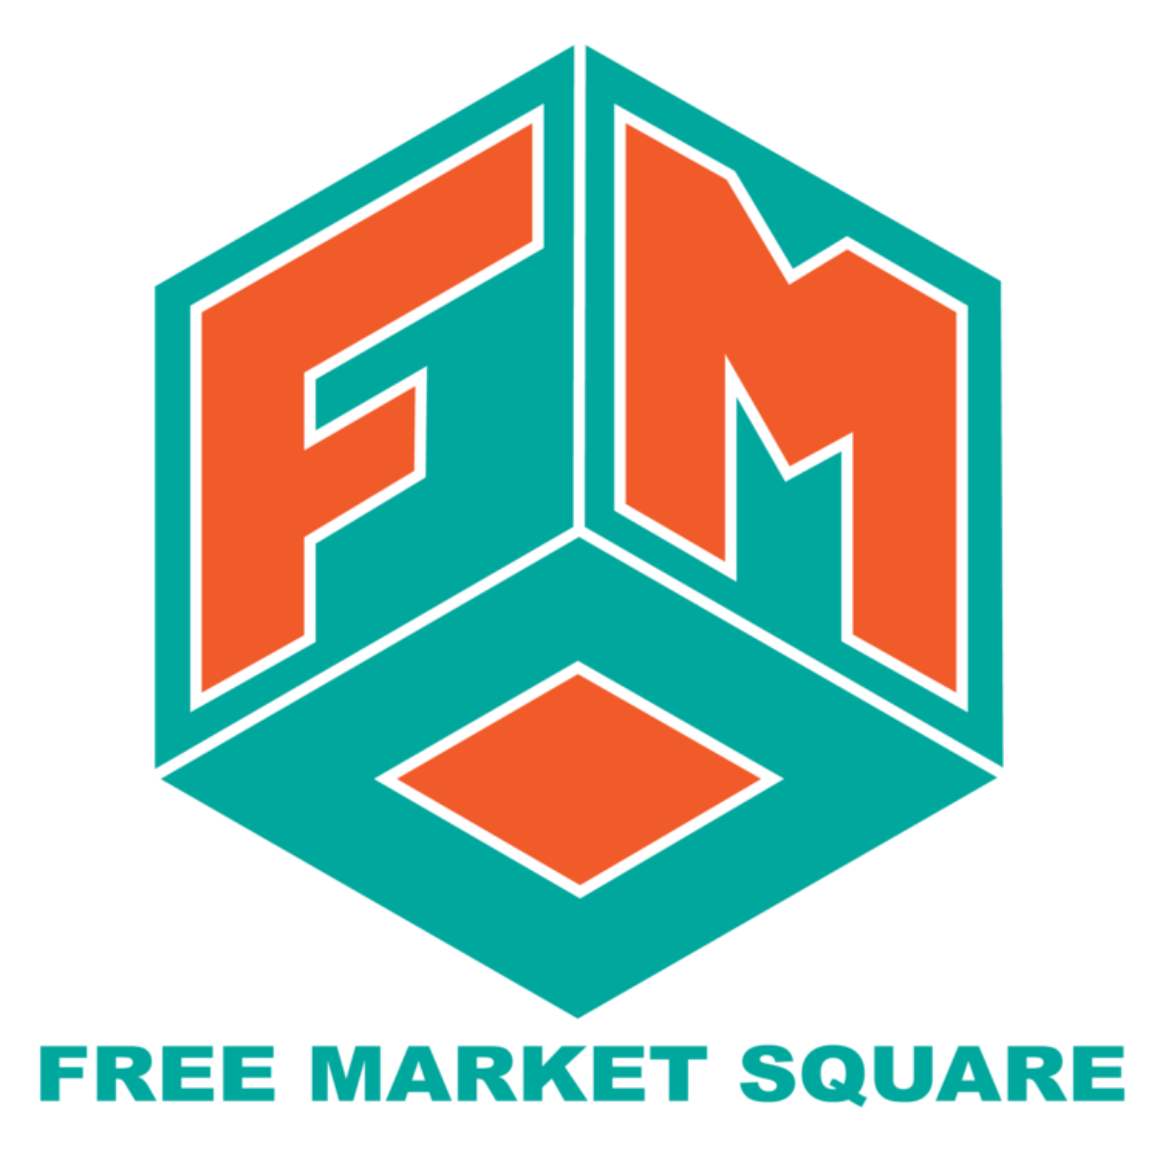 Vendor Opportunity: July Free Market Square